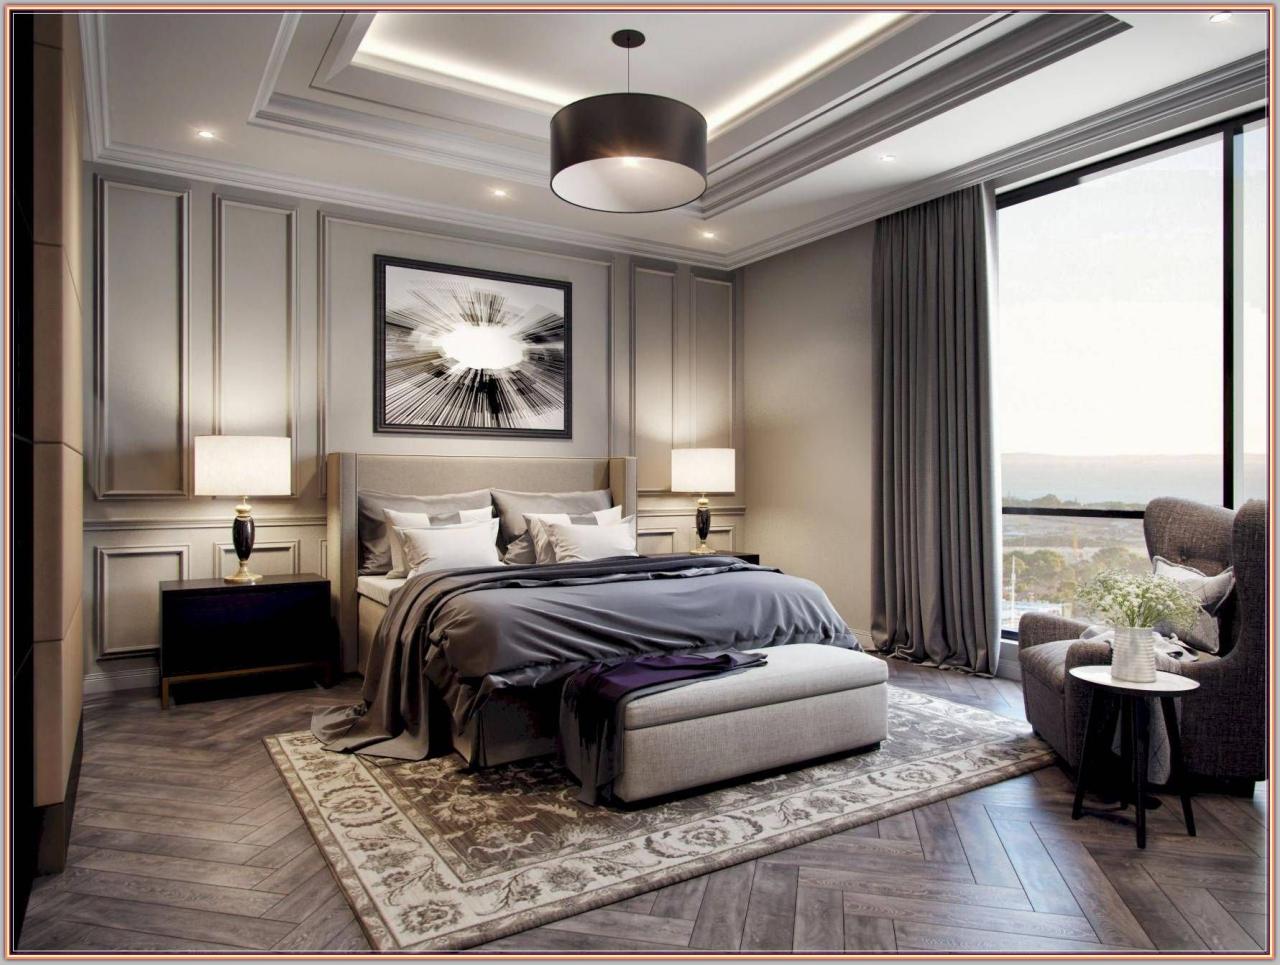 Bedroom minimalist monochrome interiorzine decor bed